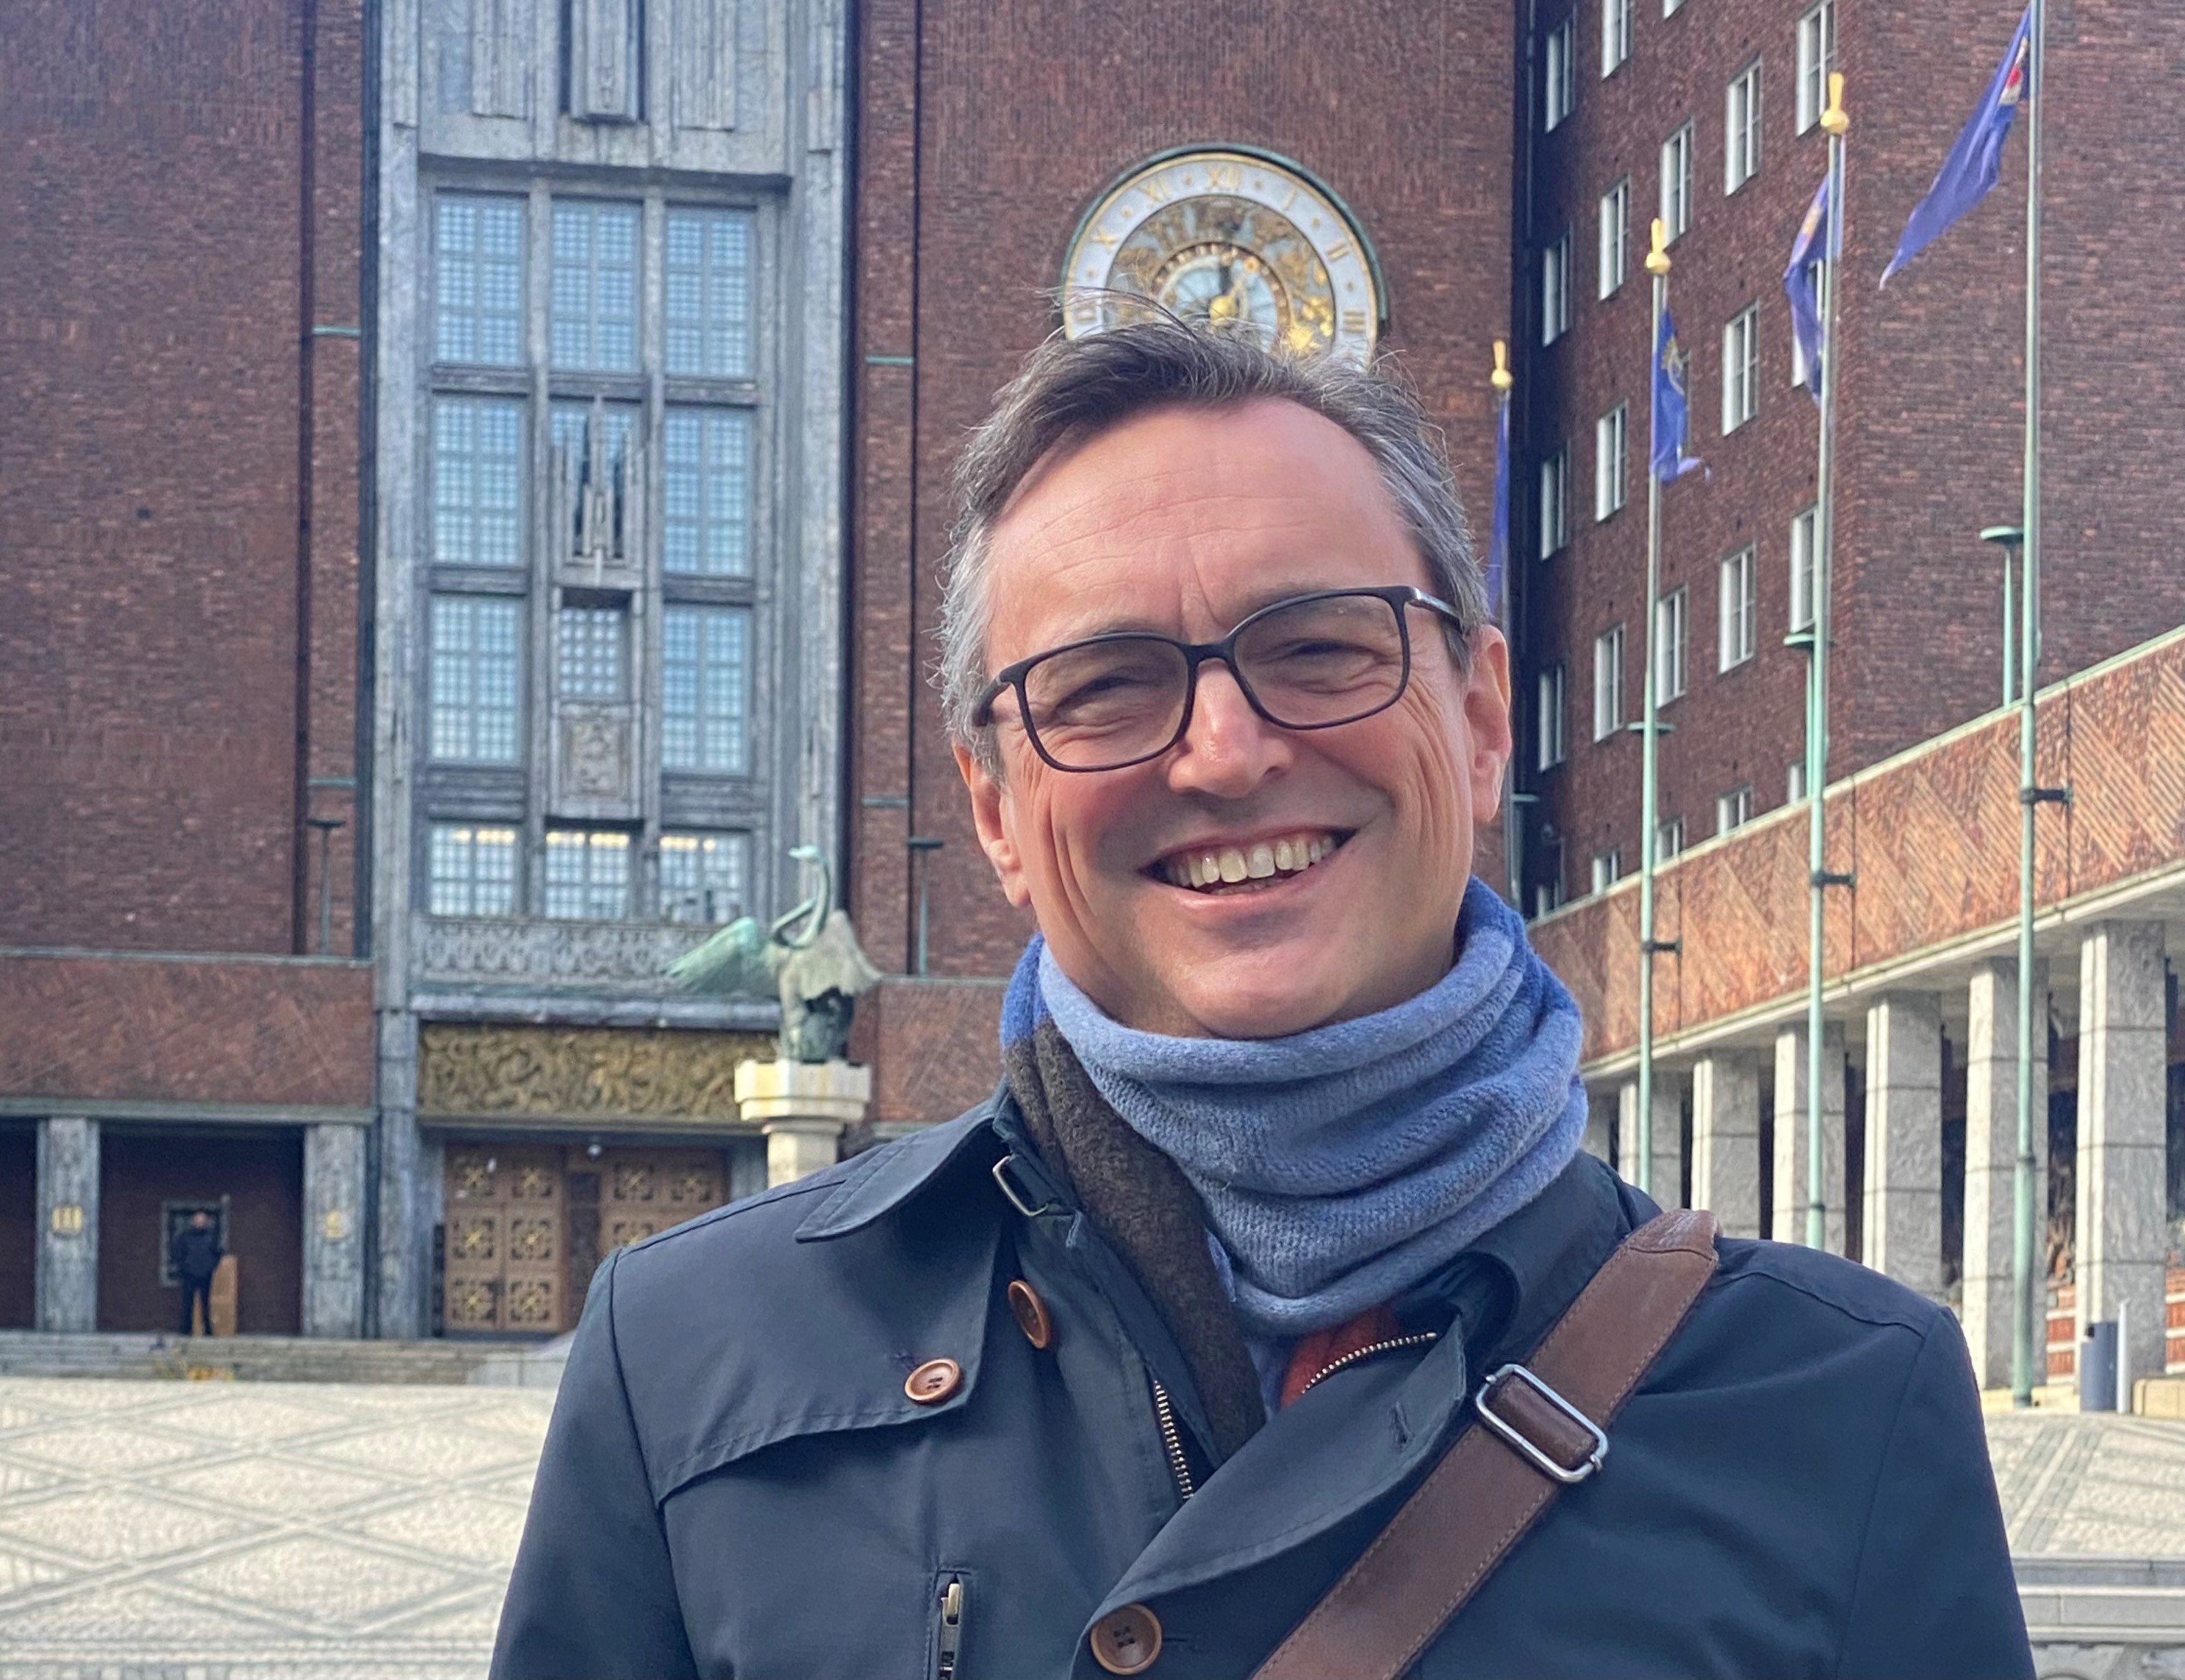 Julius Okkenhaug står foran rådhuset i Oslo og smiler til kamera